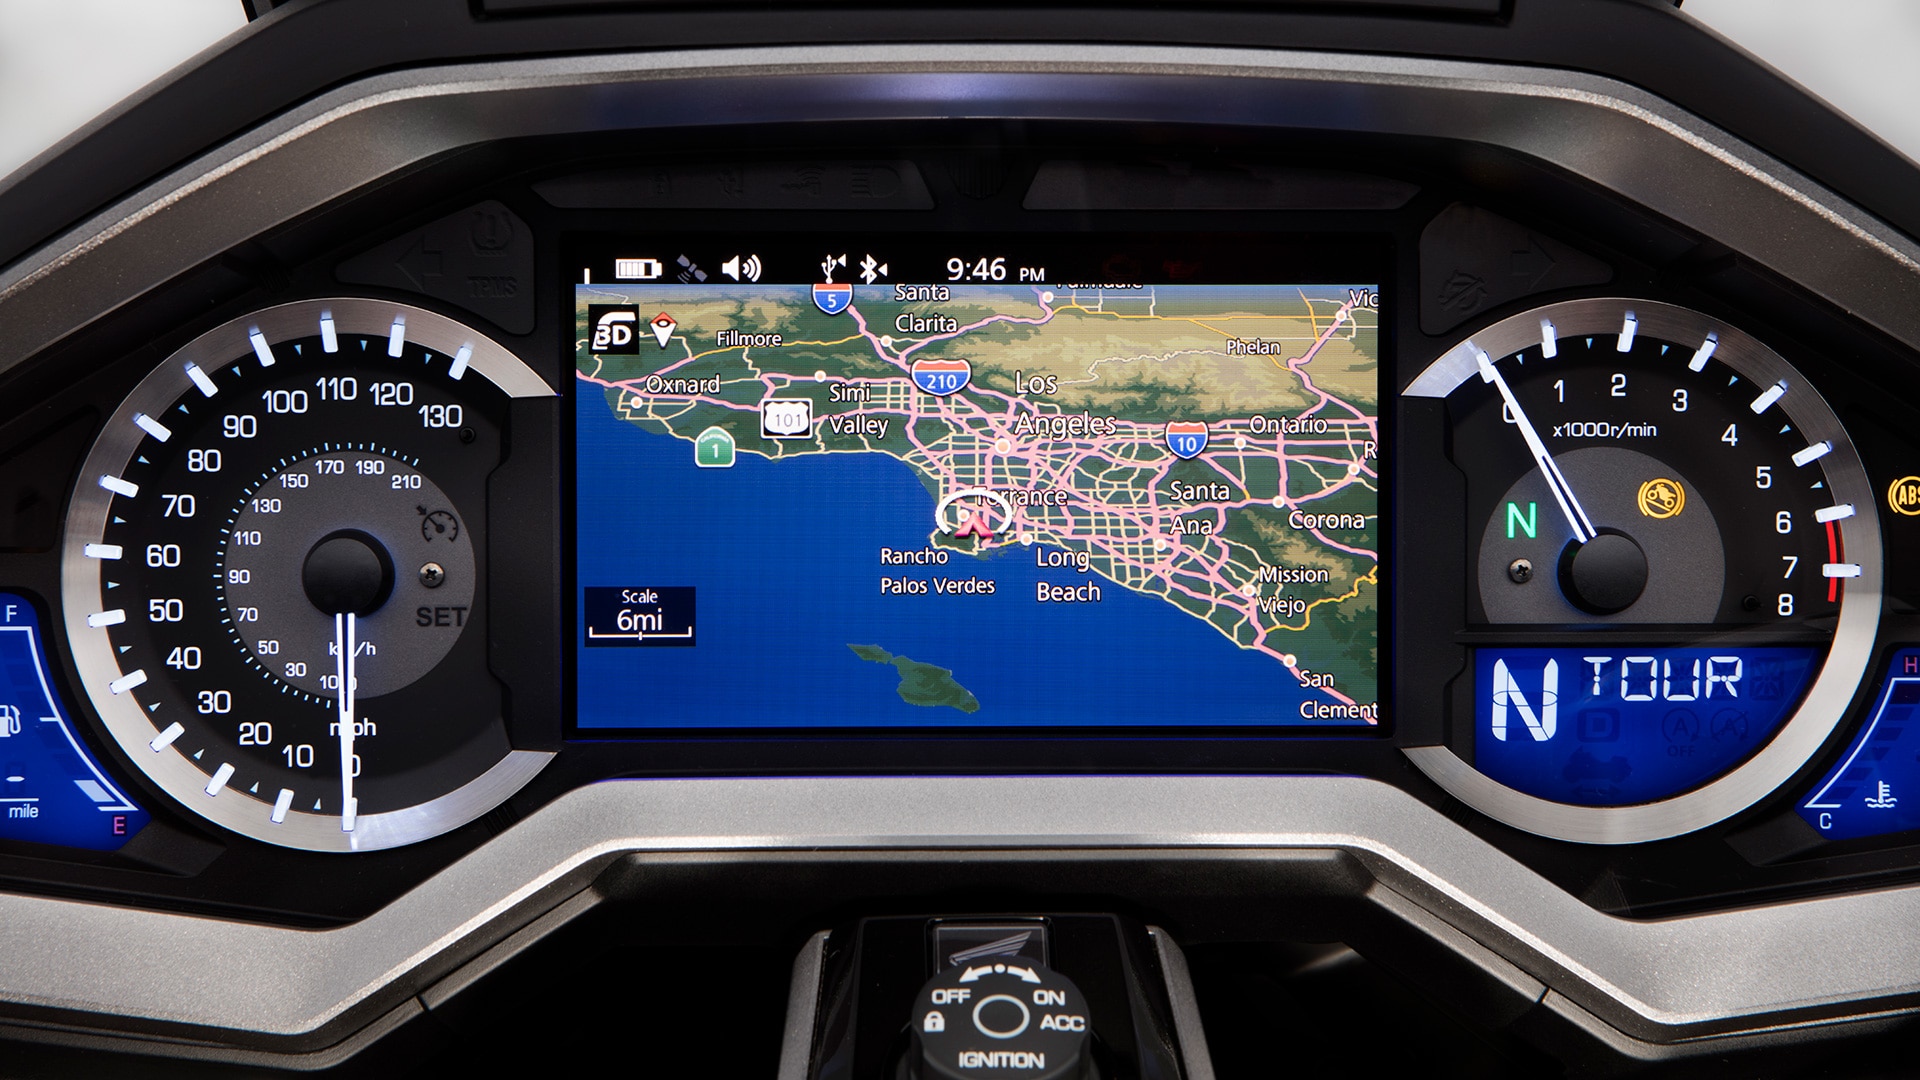 Close-Up. Digital Display. Navigationg System. Map.